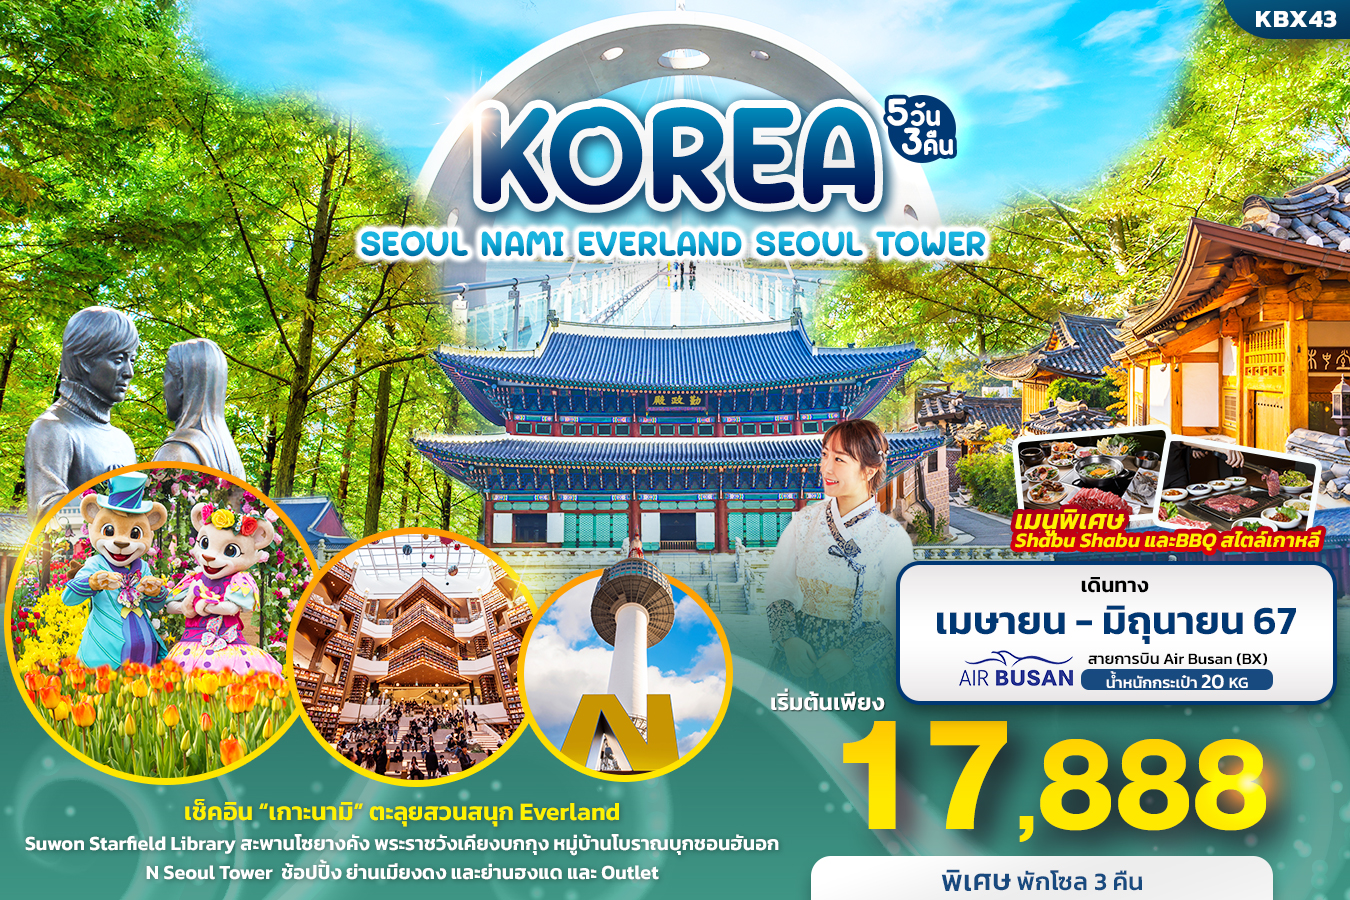 KOREA-SEOUL-NAMI-EVERLAND-SEOUL-TOWER-5วัน3คืน-โดยสายการบิน-Air-Busan-(BX)